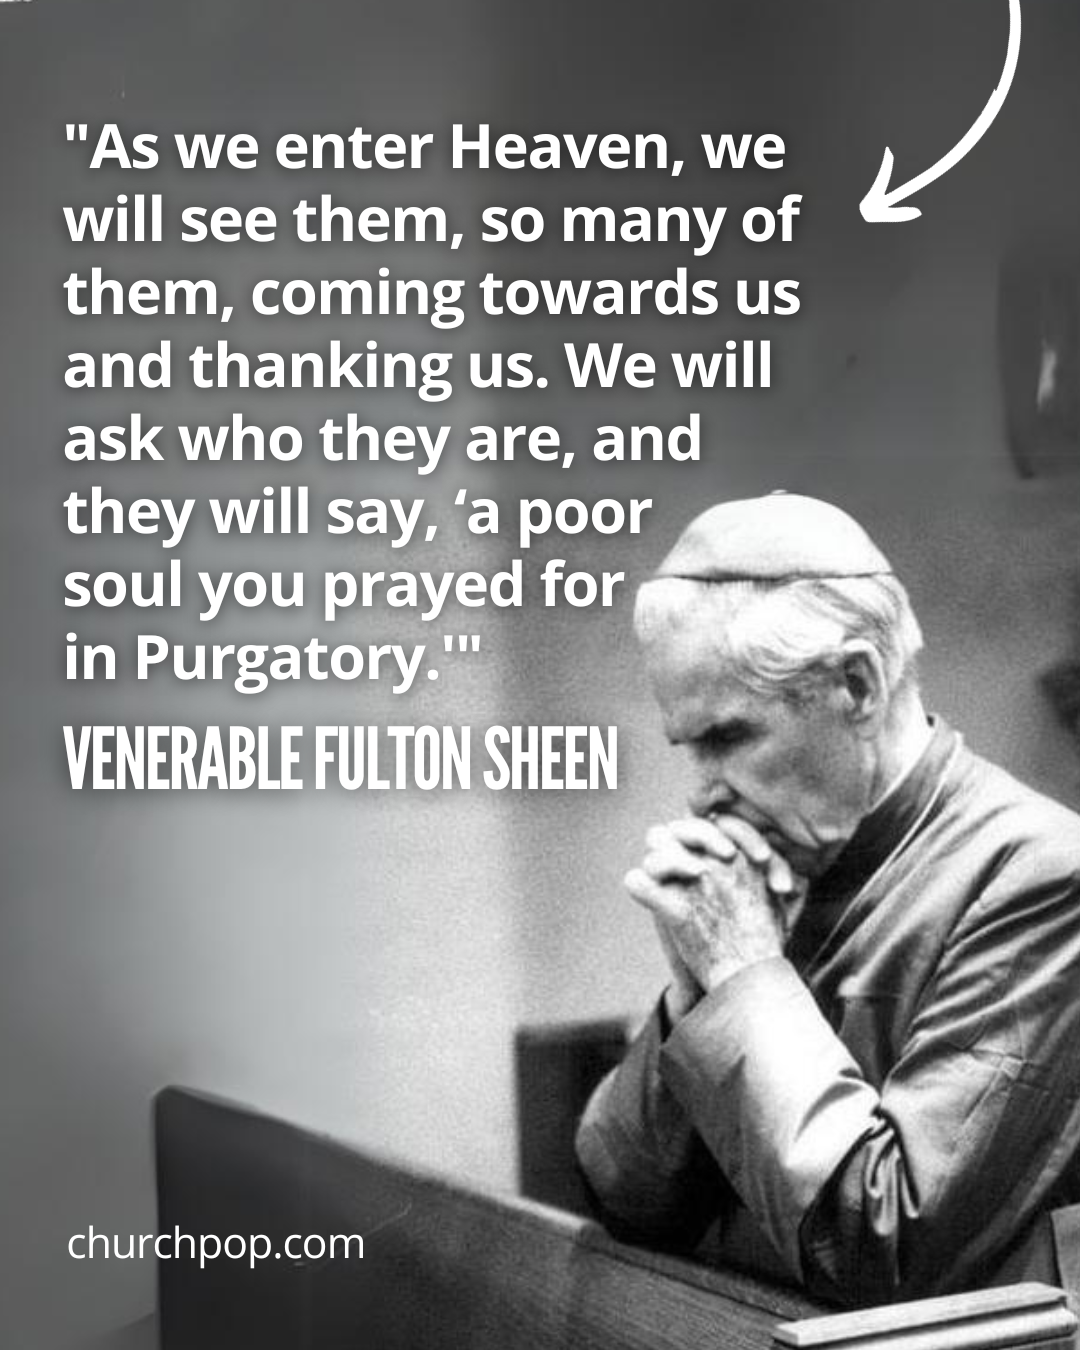 fulton sheen, archbishop fulton sheen, purgatory, purgatory in the bible, catholic church, catholic saints, saint quotes